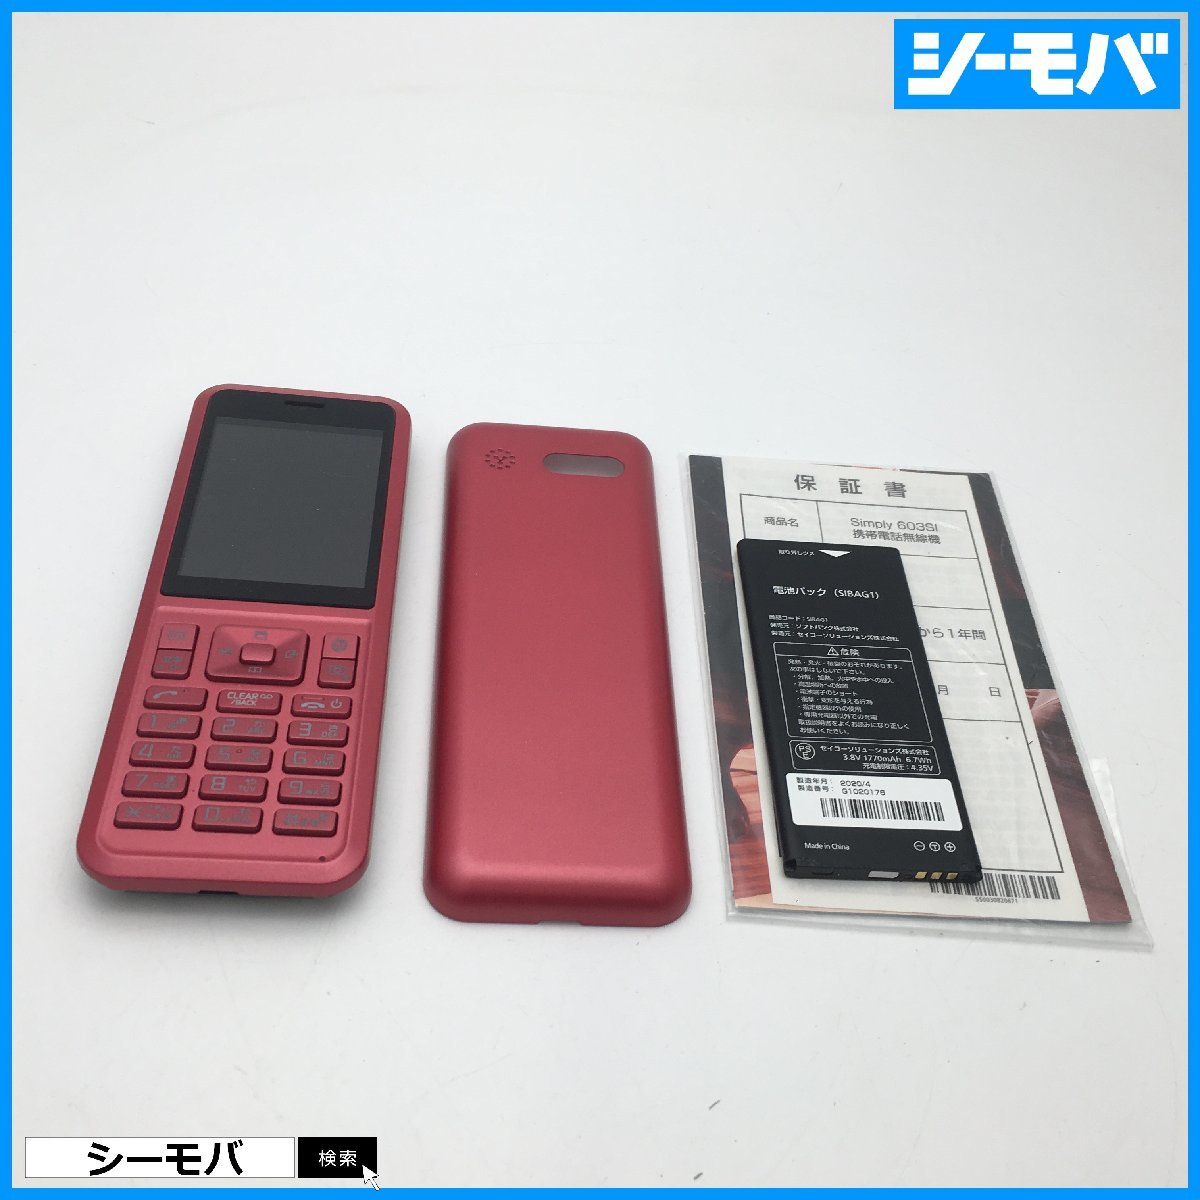 Simply ワイモバイル 携帯本体 Red - 携帯電話